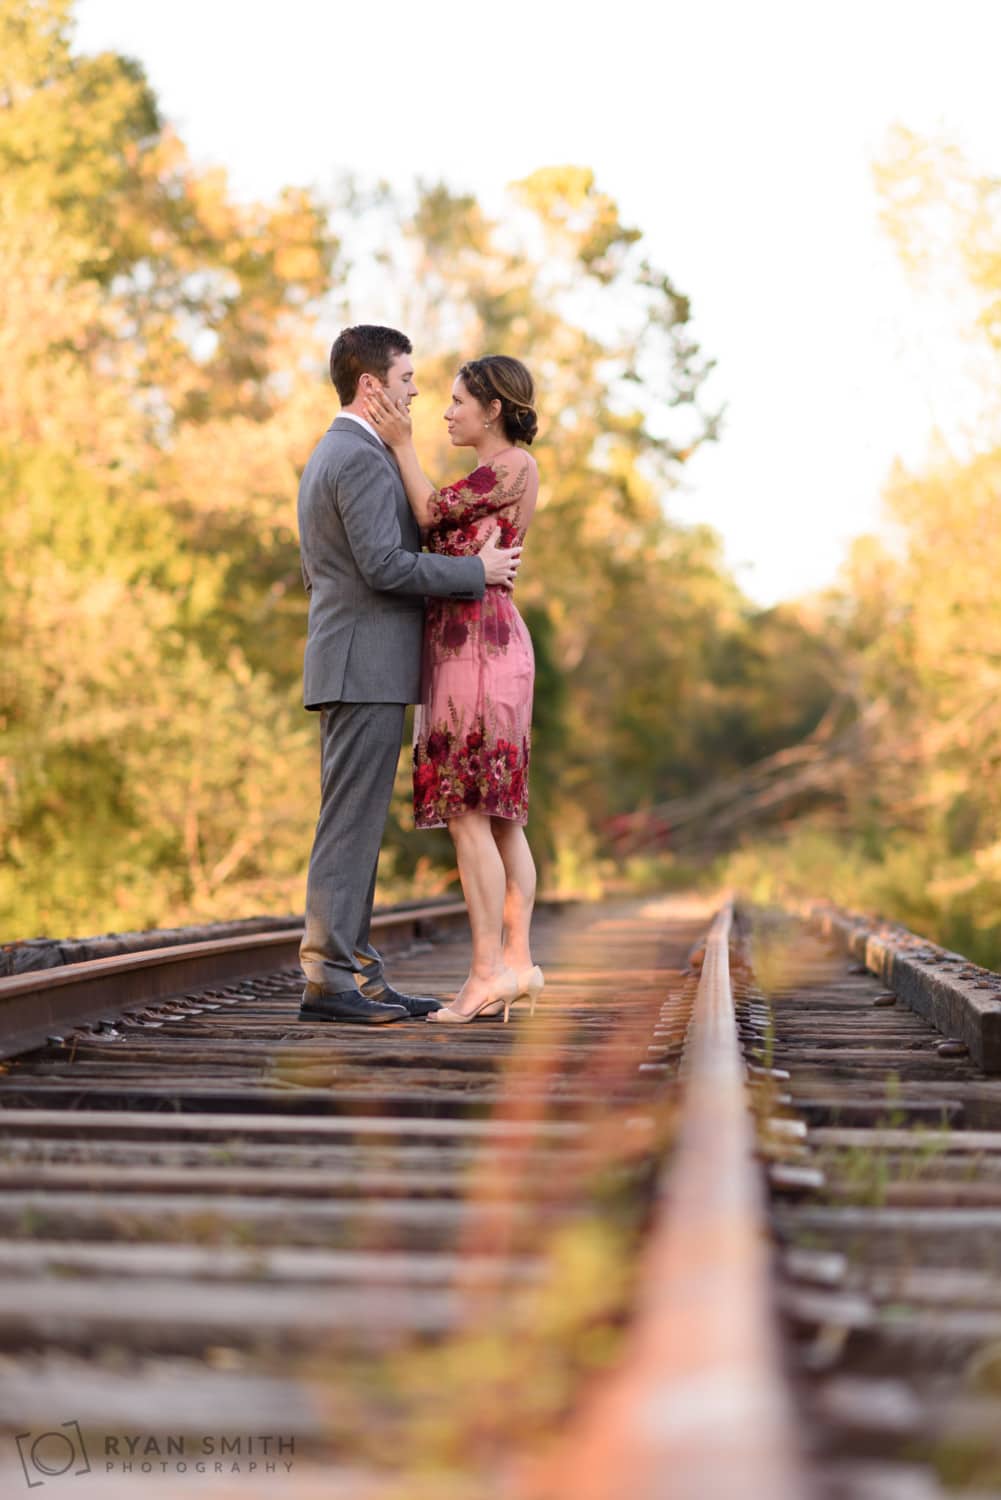 Engagement portrait close to train rail - Conway River Walk